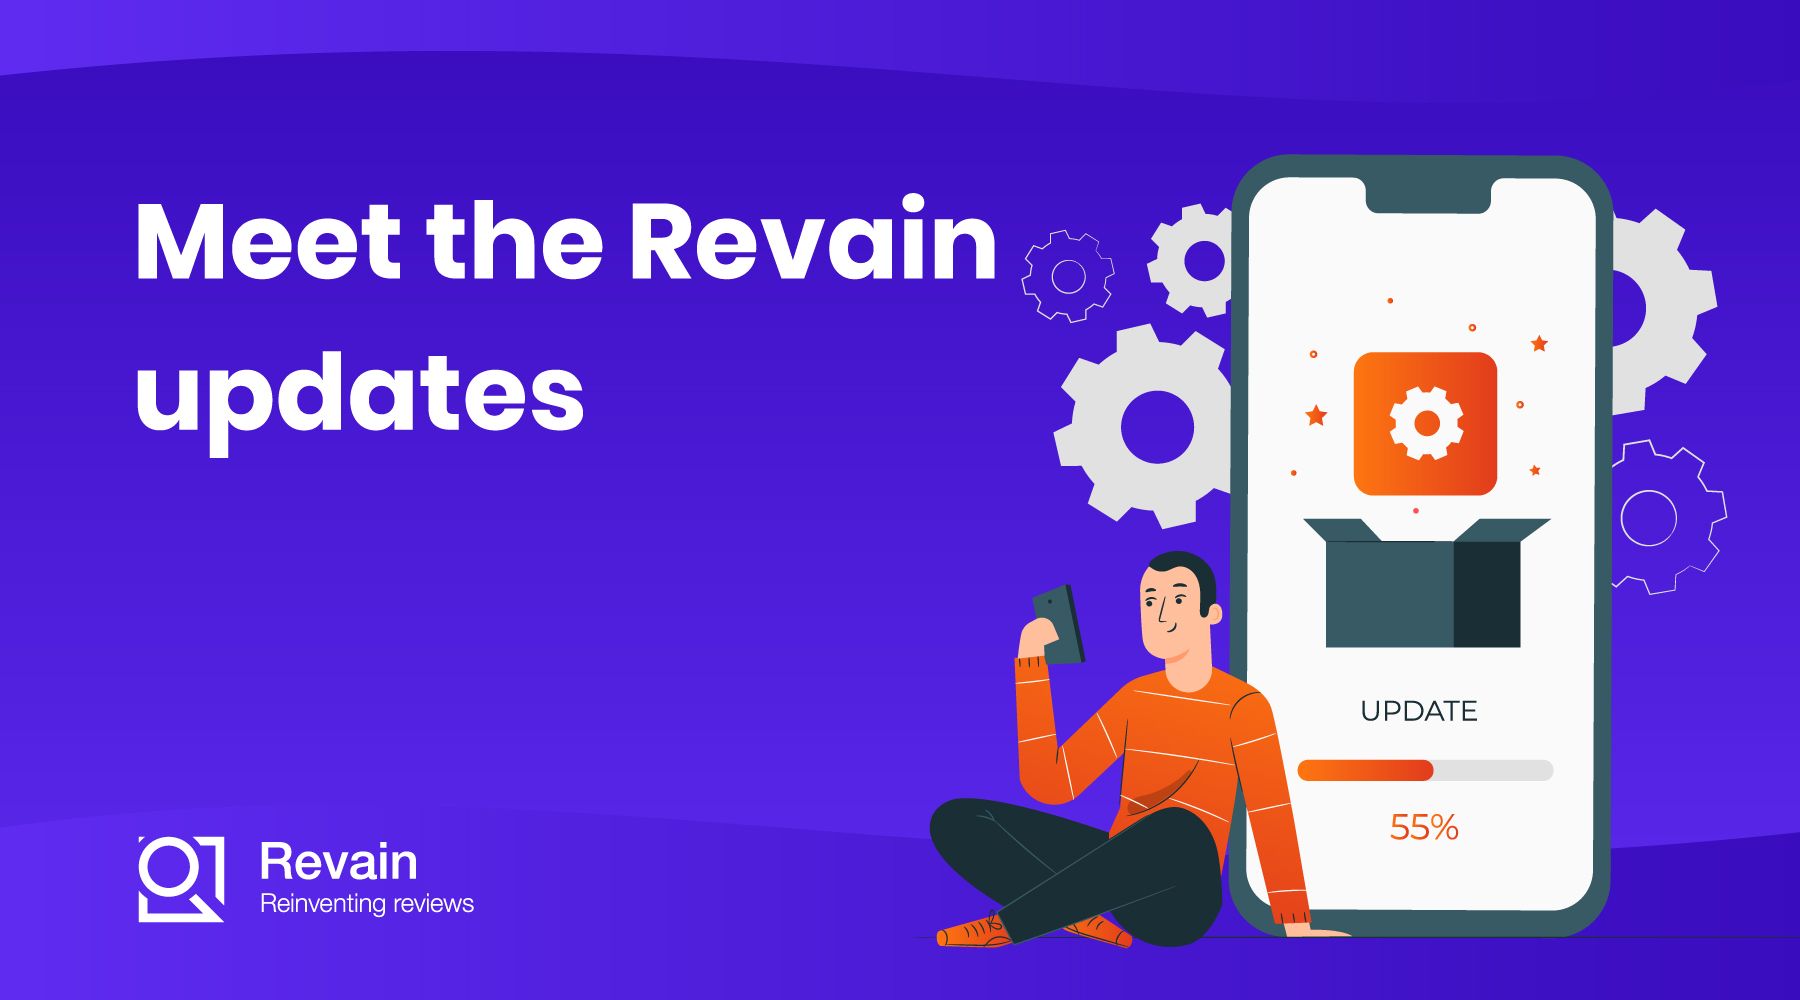 Article Meet the new Revain updates!